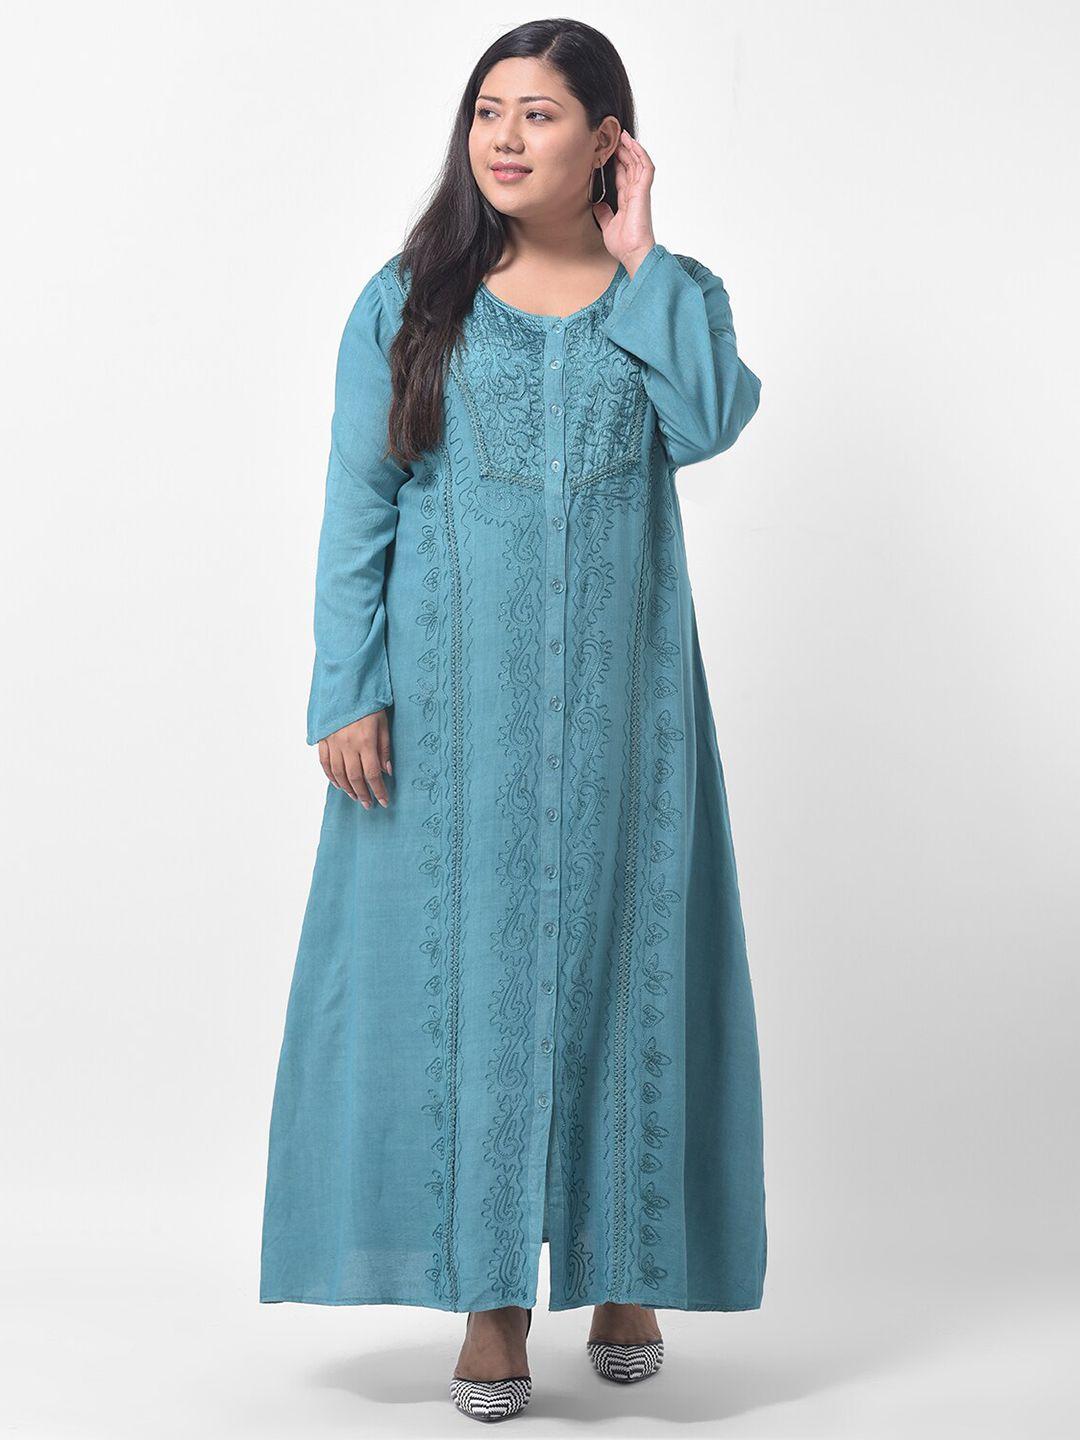 veldress blue ethnic motifs embroidered ethnic maxi dress